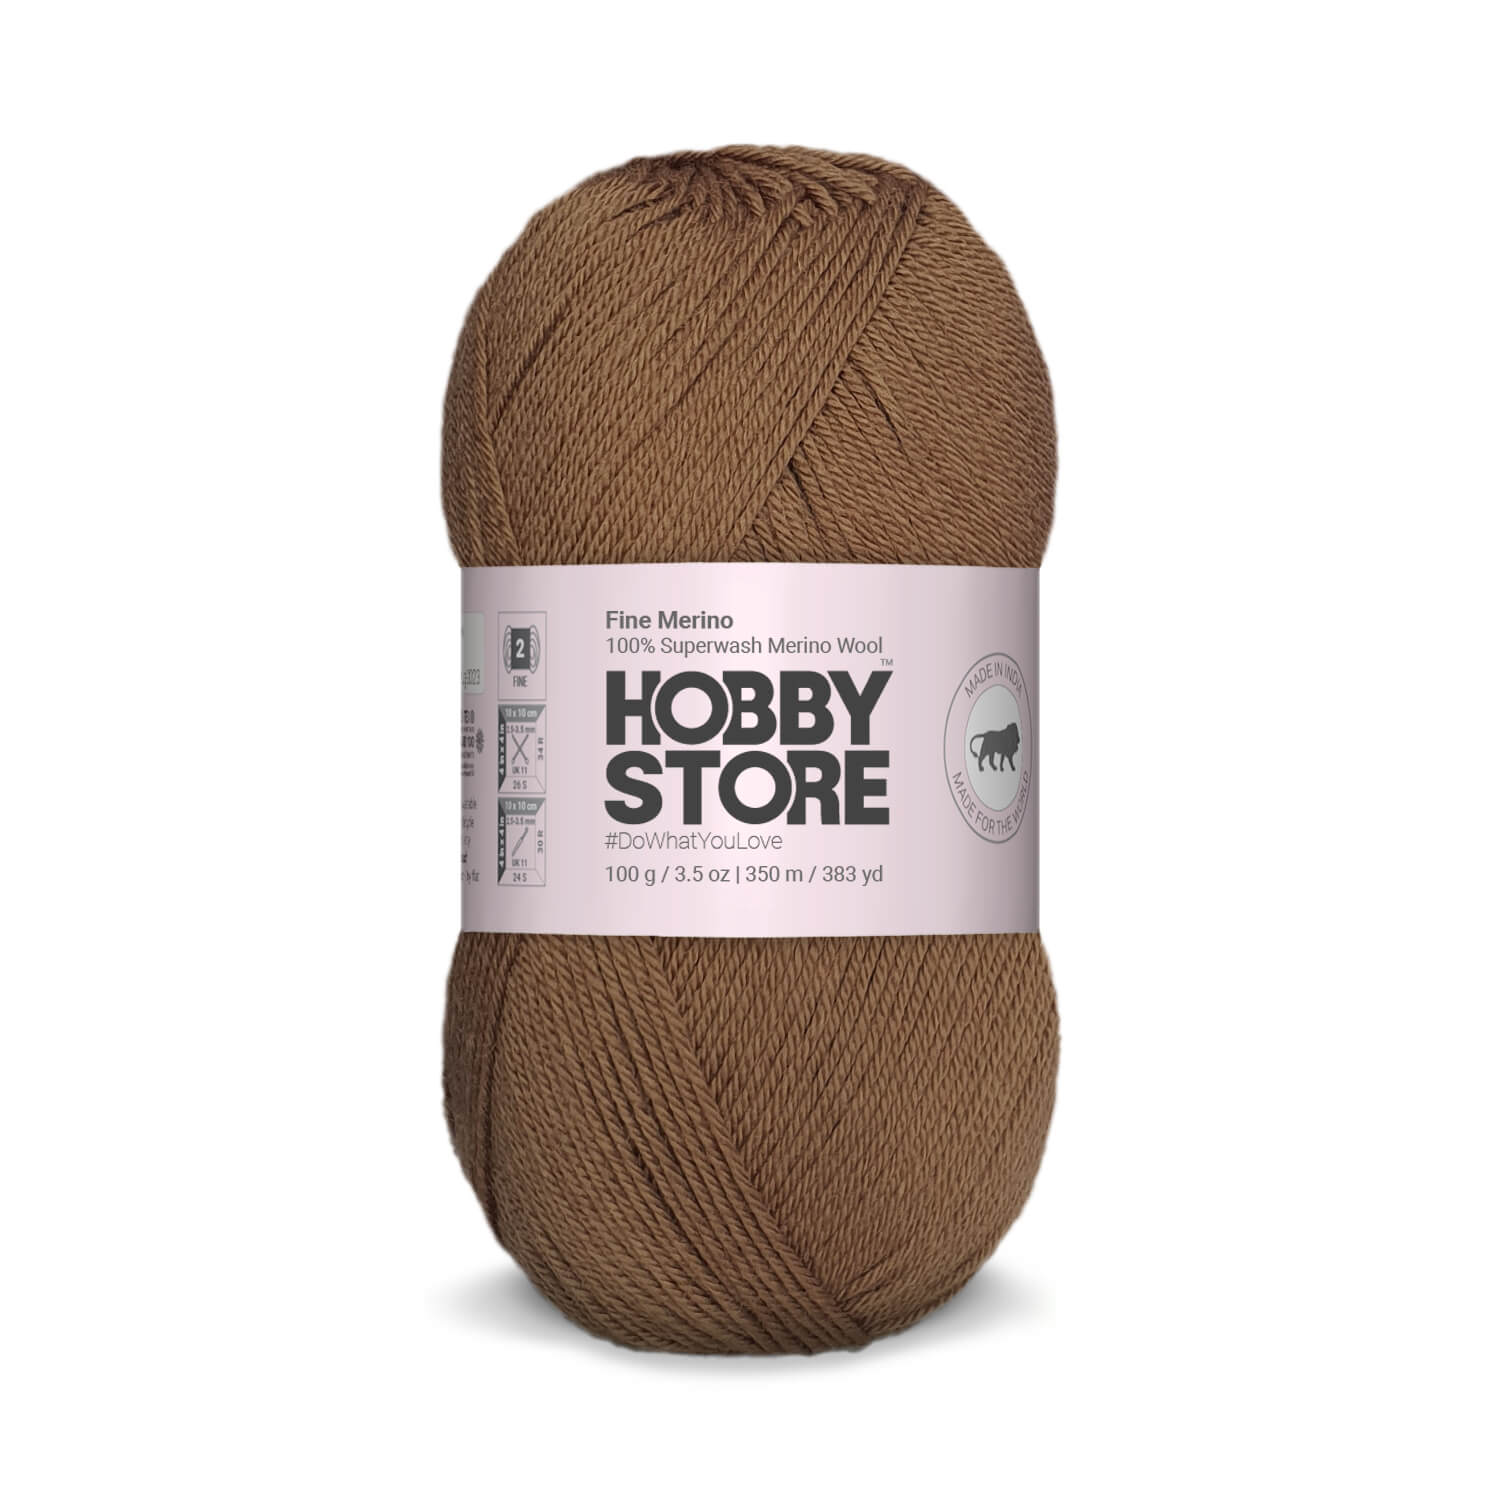 Fine Merino Wool by Hobby Store - Brown FM020